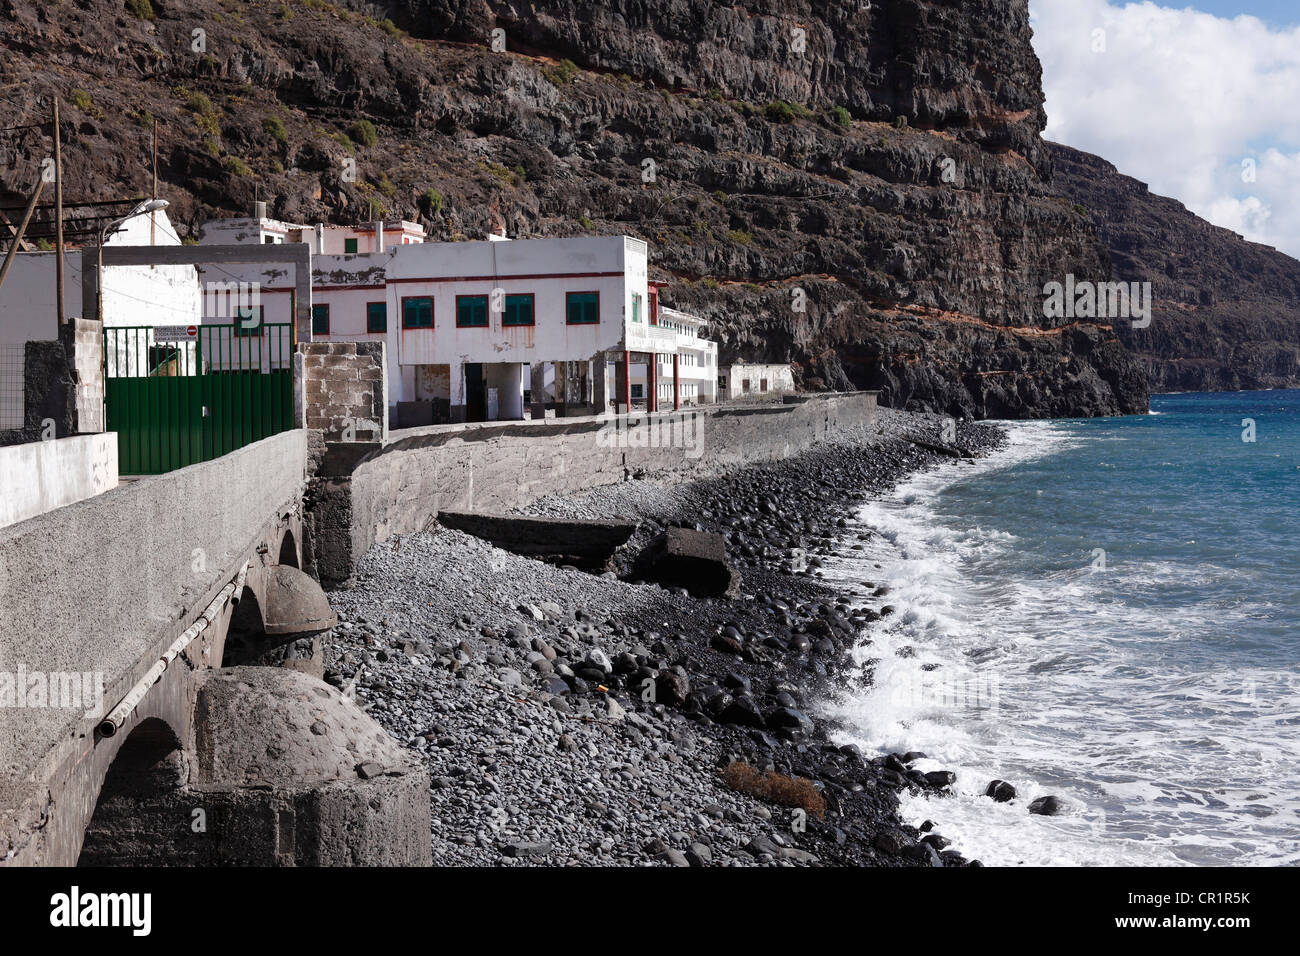 Ruins of a former banana harbour, La Rajita near La Dama, La Gomera island, Canary Islands, Spain, Europe Stock Photo